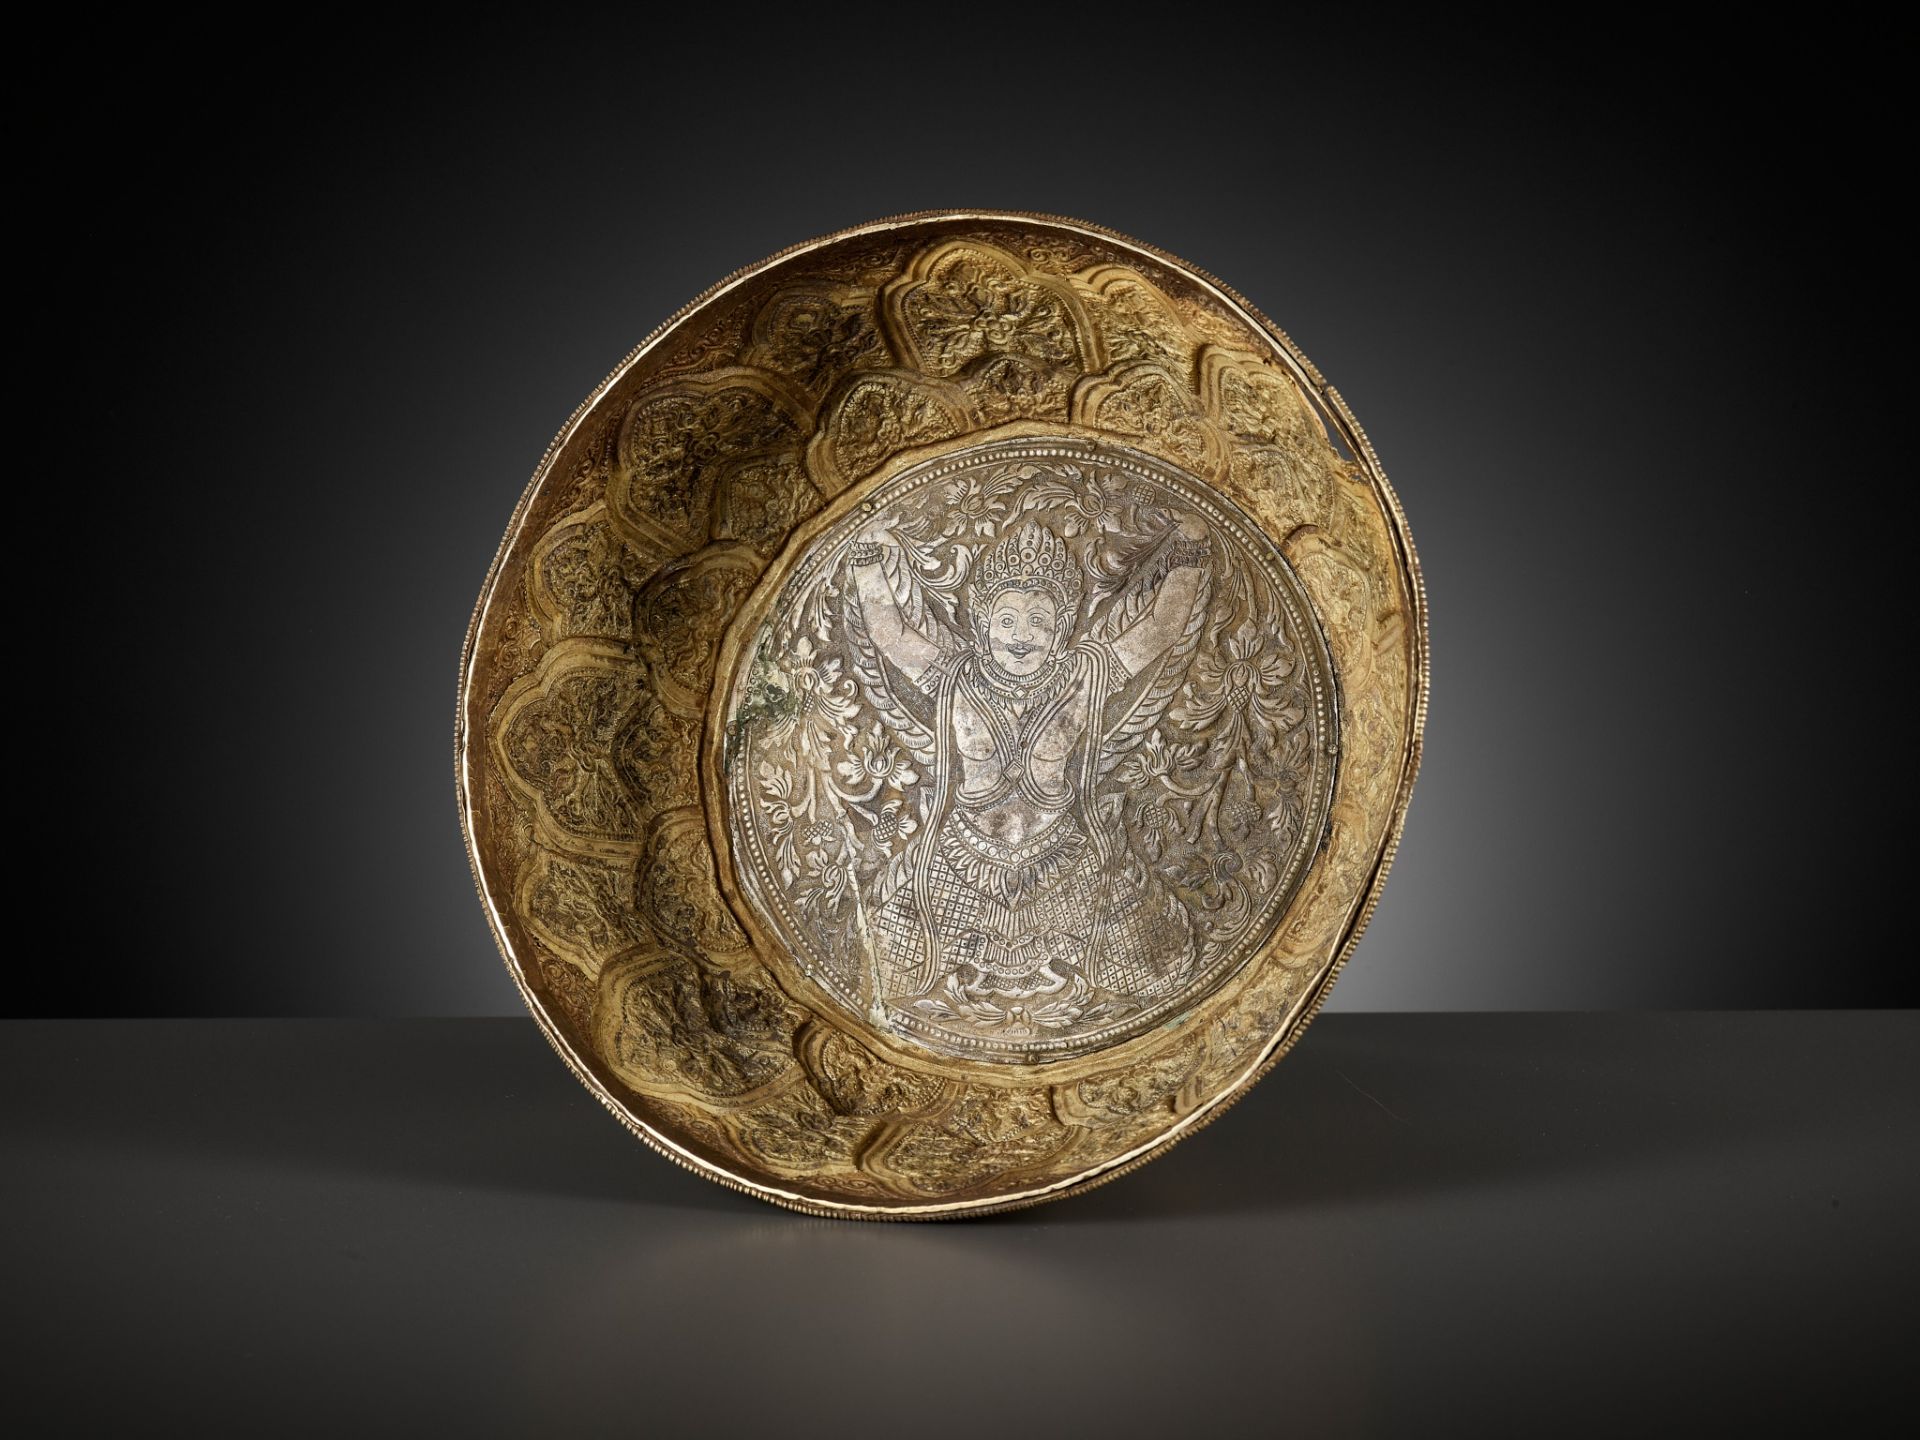 A SILVER-INLAID GOLD REPOUSSÉ BOWL DEPICTING GARUDA, VIETNAM,FORMER KINGDOMS OF CHAMPA,CIRCA 10TH C. - Image 16 of 18